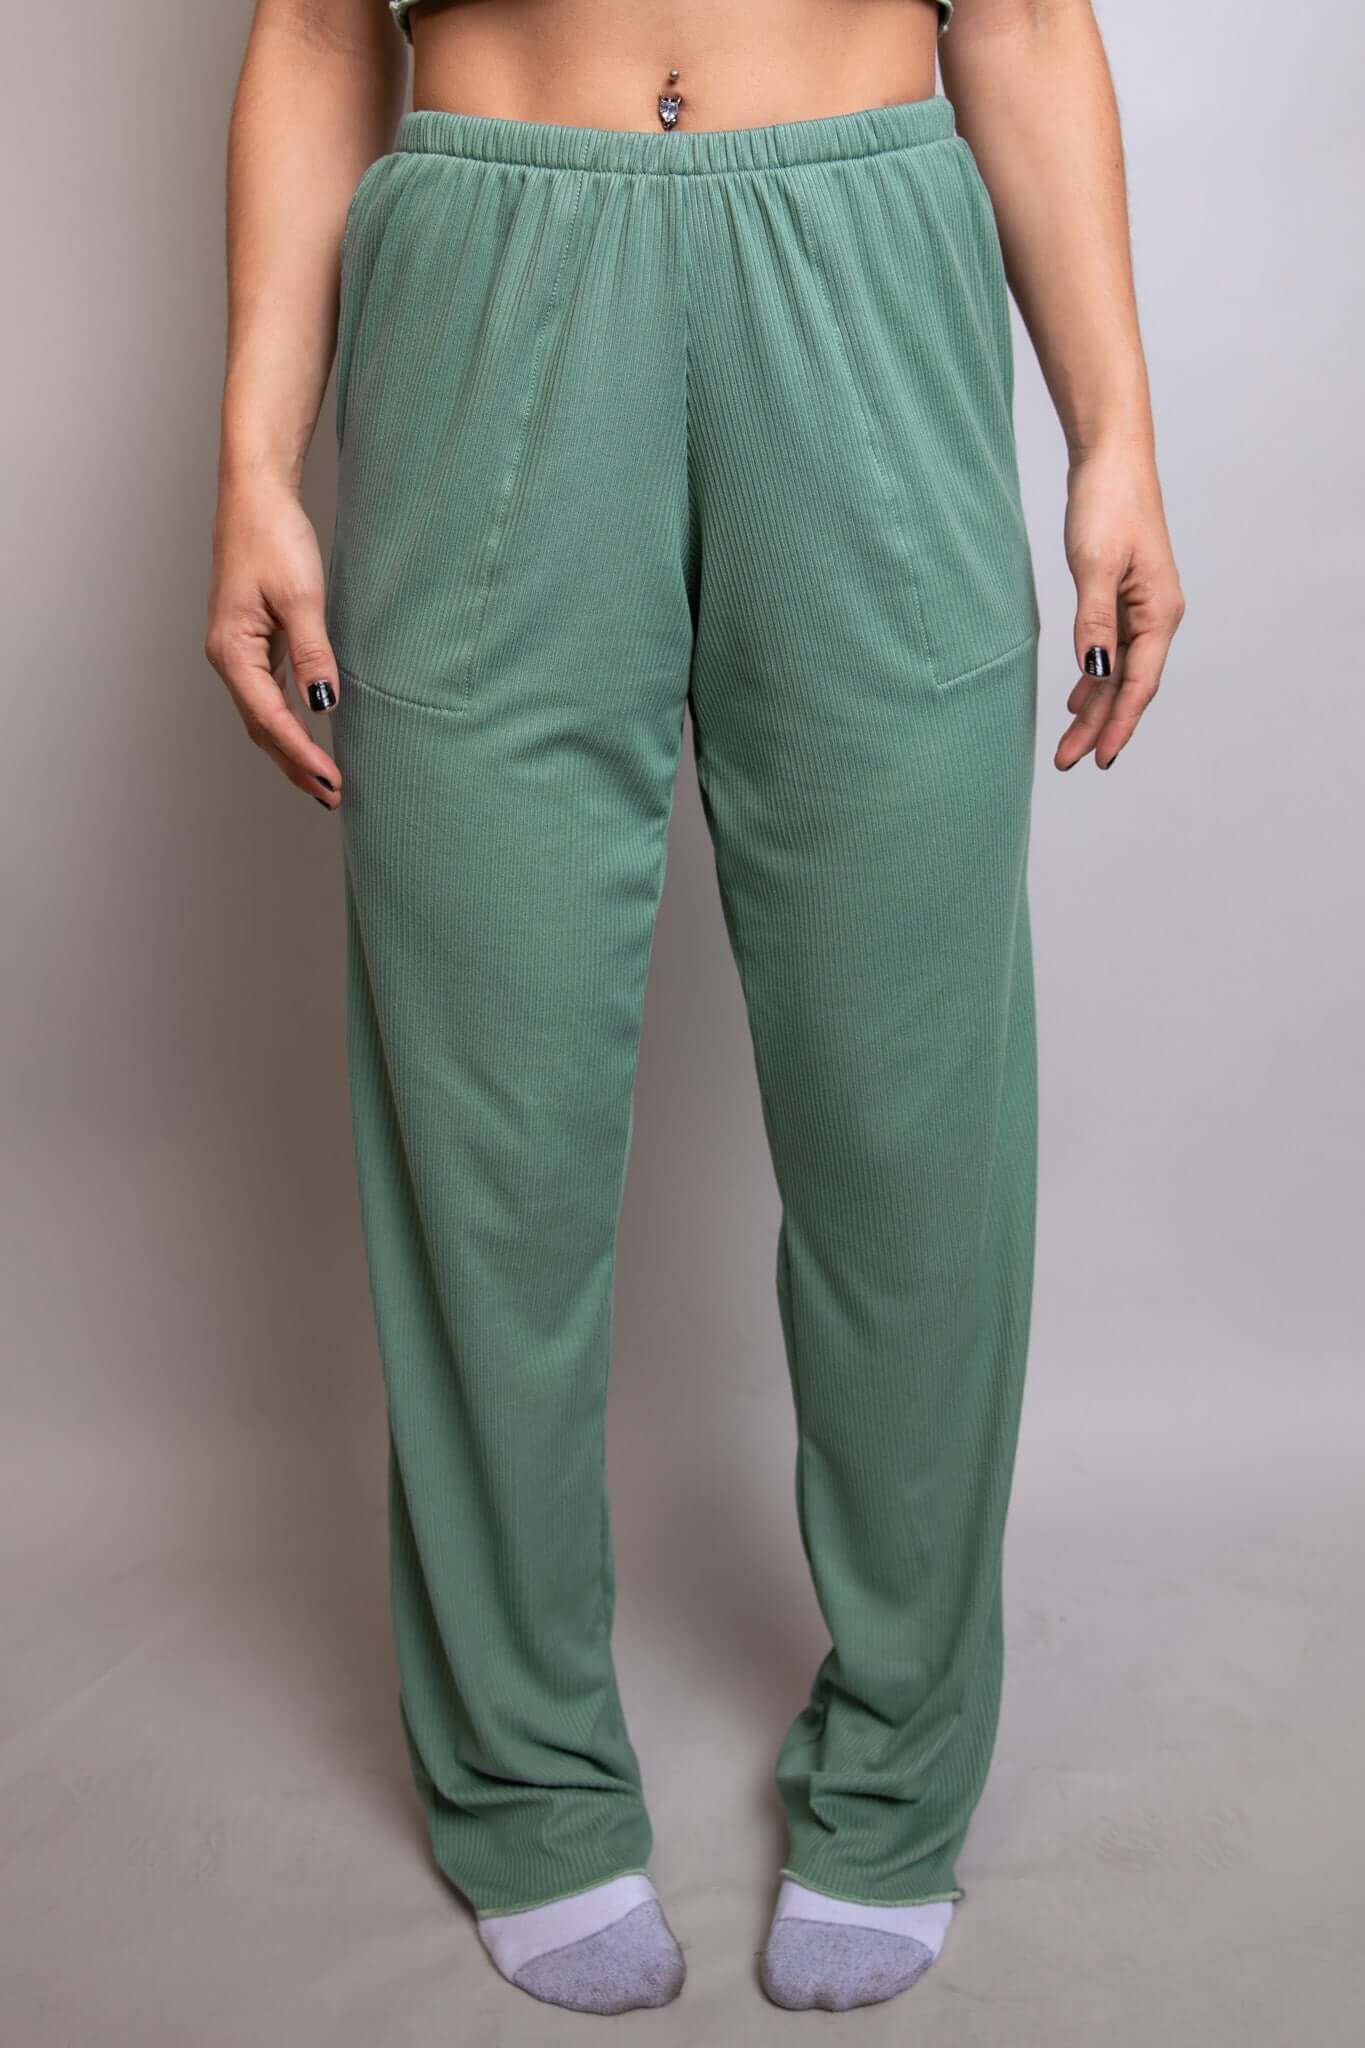 Fleecewear with Stretch Lounge Pant